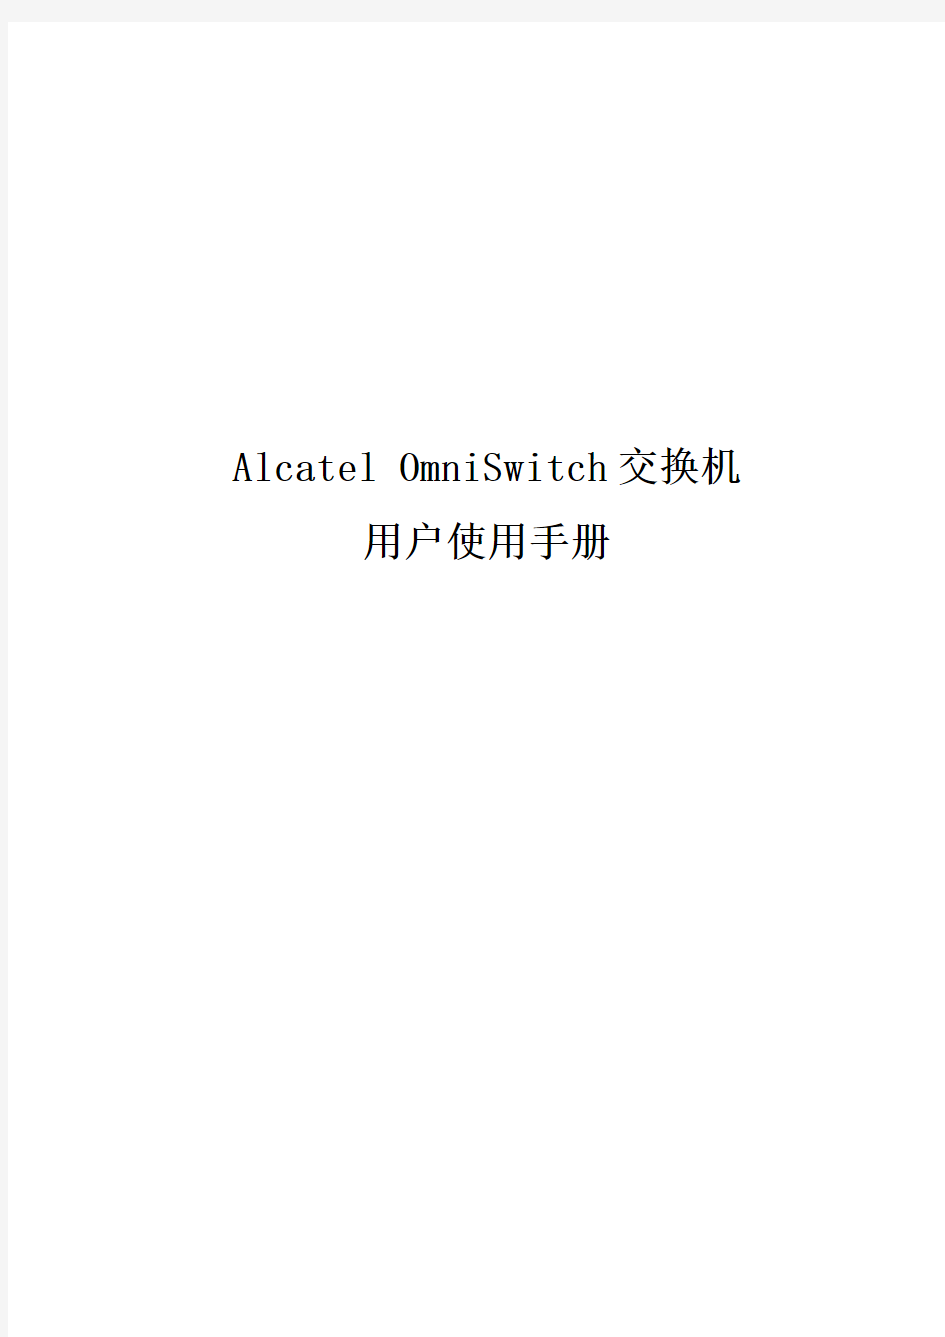 Alcatel OmniSwitch交换机 用户使用手册